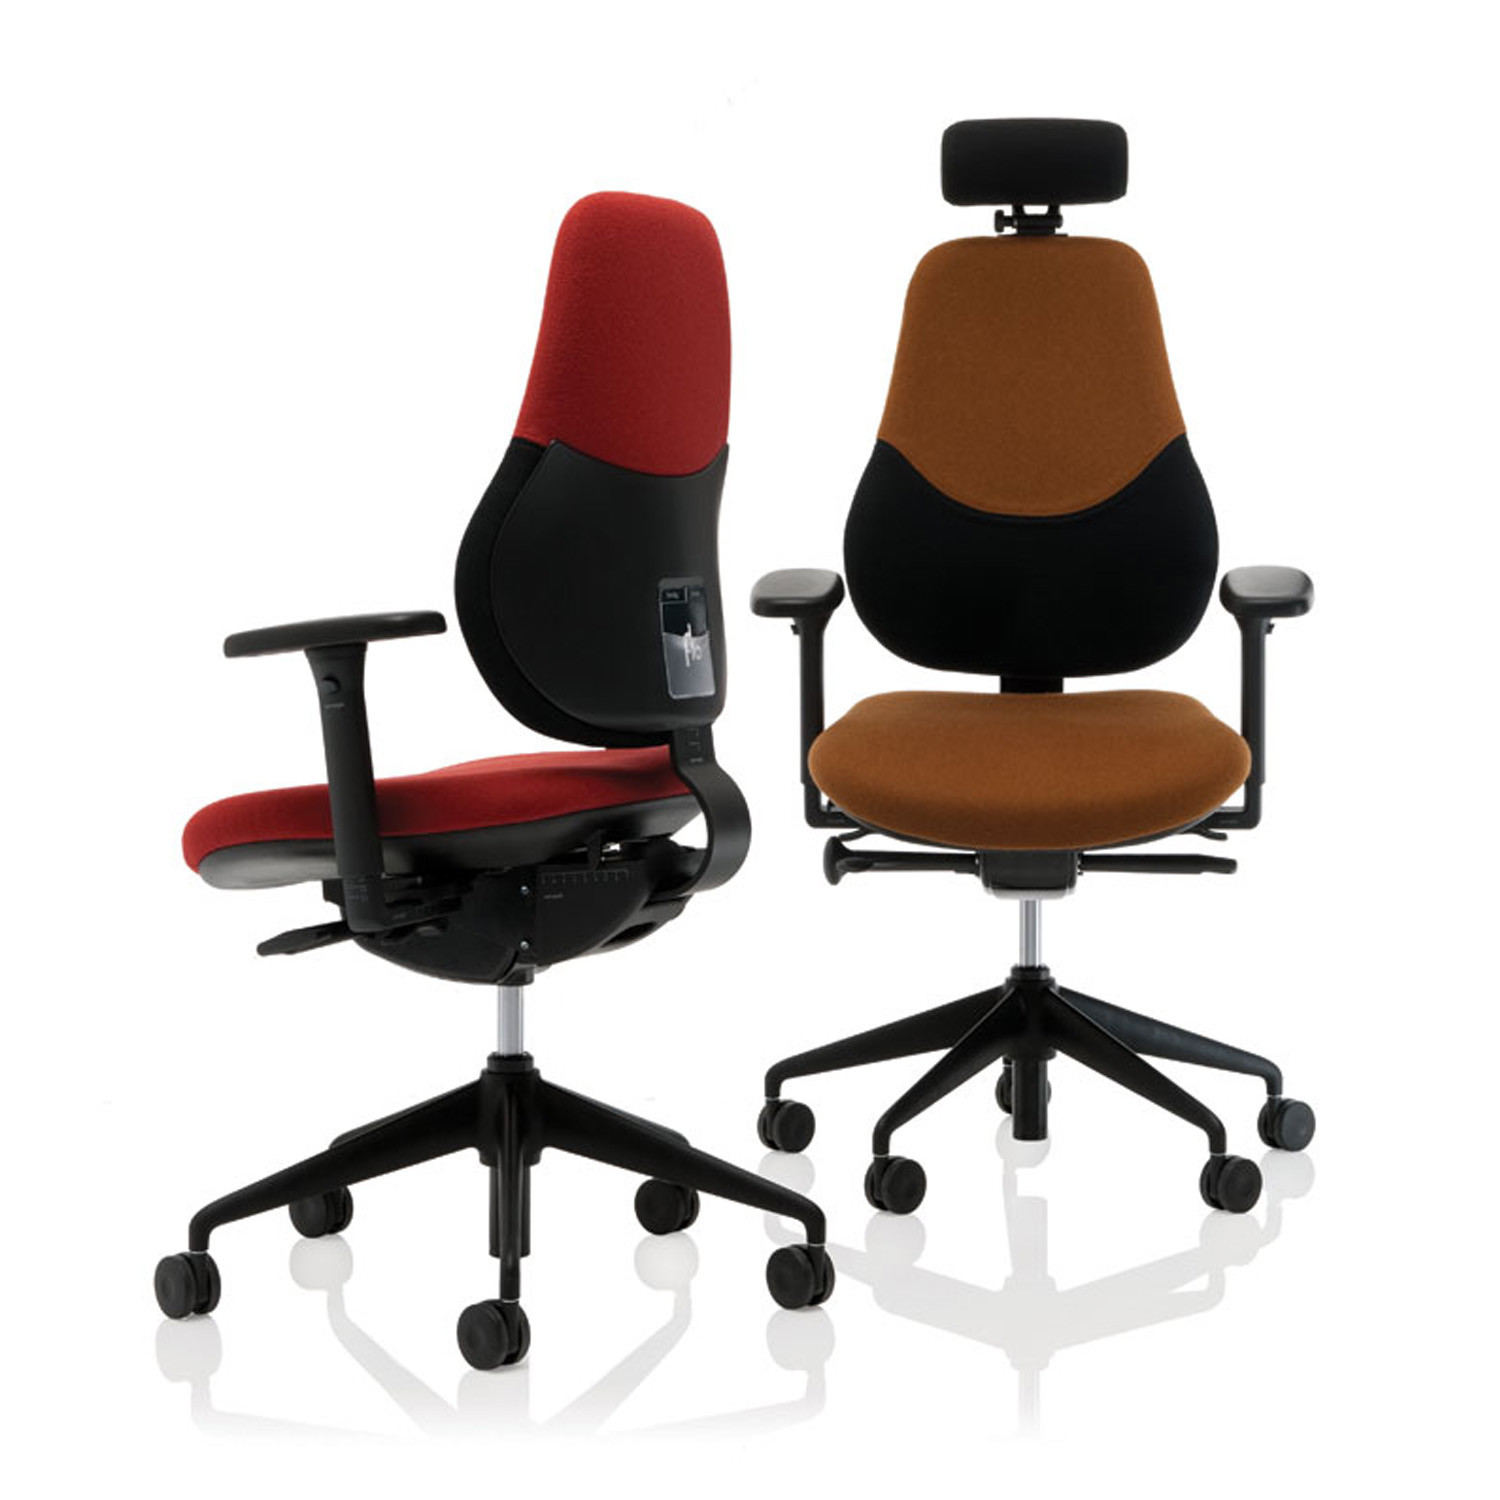 Flo Ergonomic Task Chairs by Orangebox